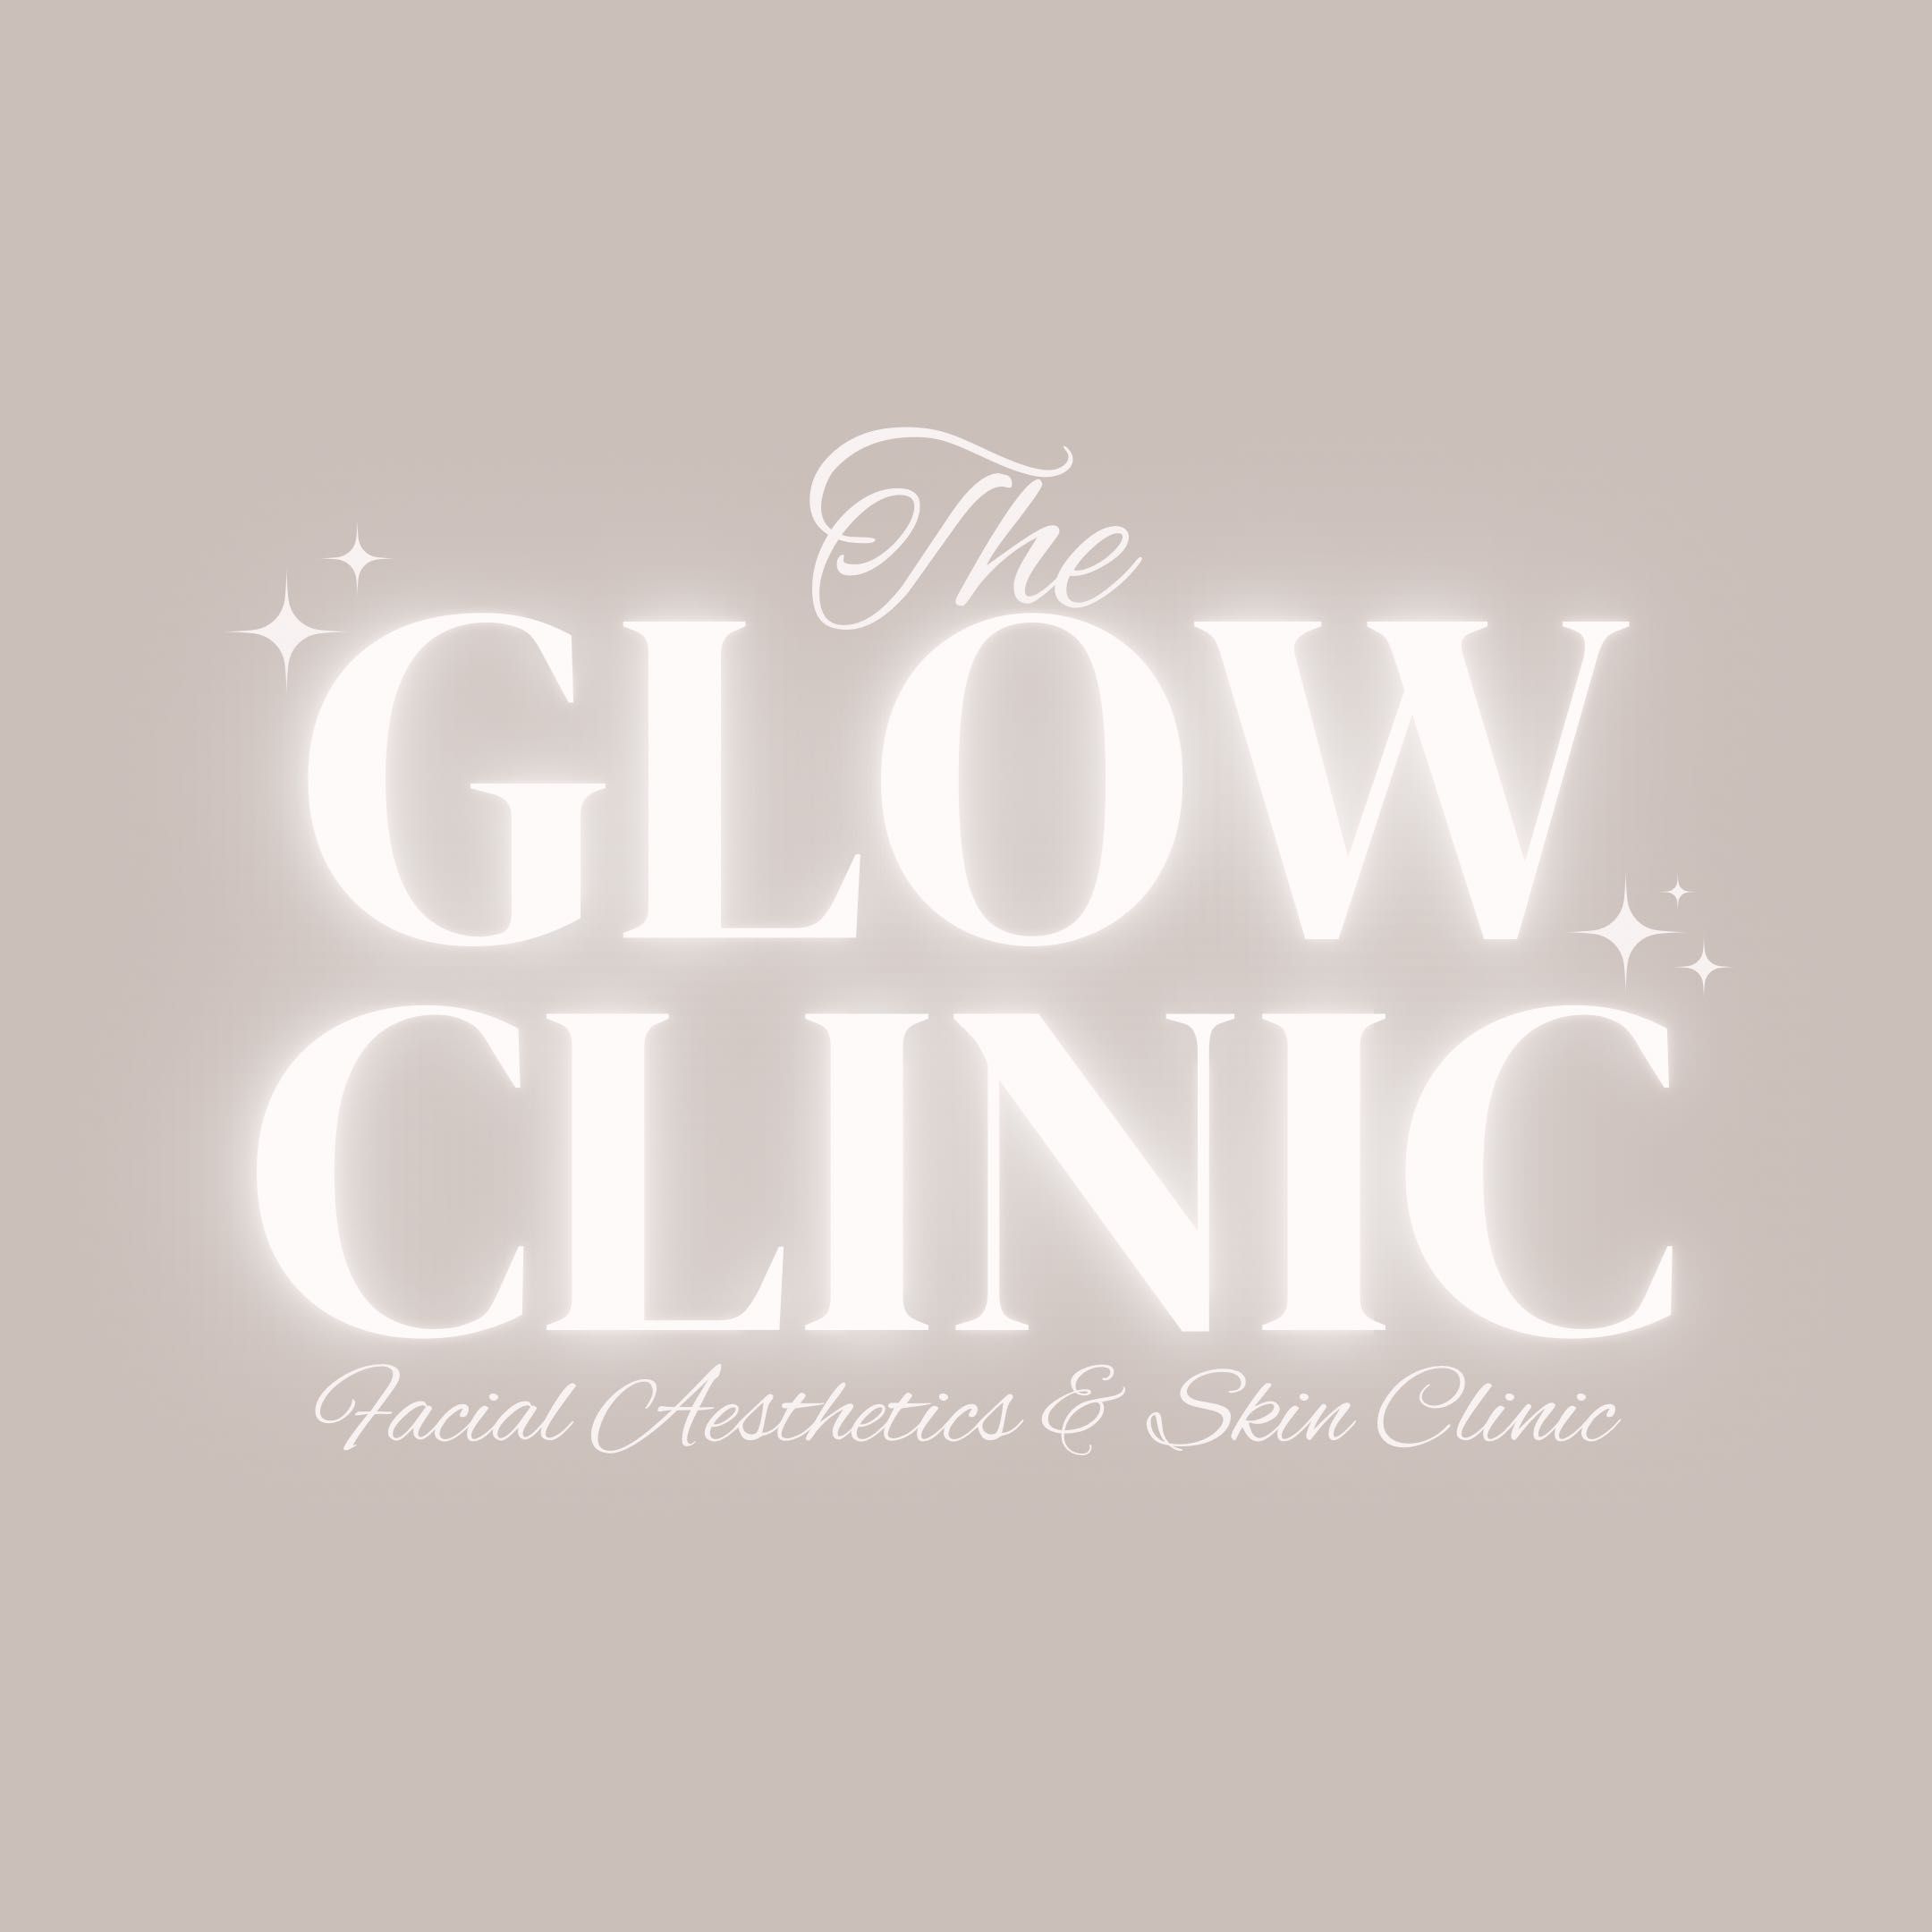 The Glow Clinic Bristol, The Glow Clinic, Unit 4 Beaufort Mews, Chipping Sodbury, BS37 6DA, Bristol